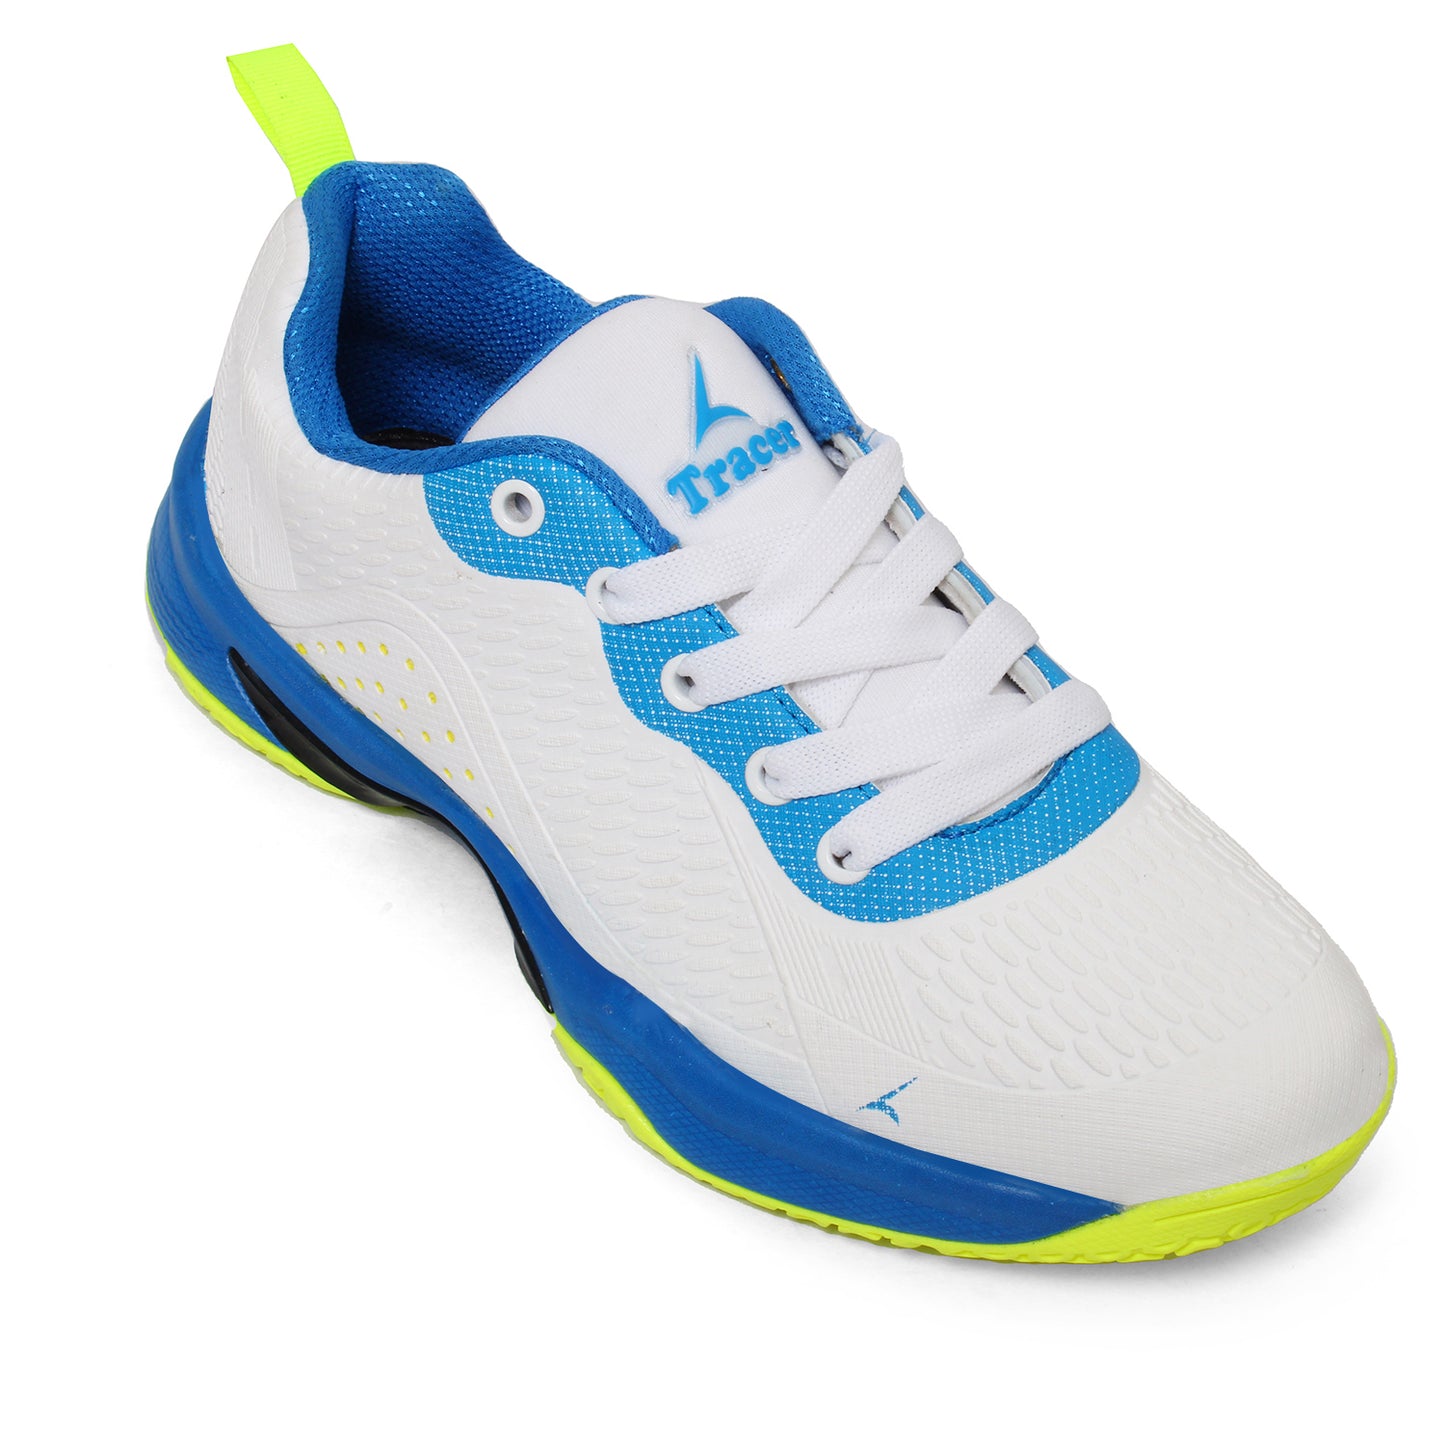 Tracer Tennis Badminton Sports Shoe For Kid's White